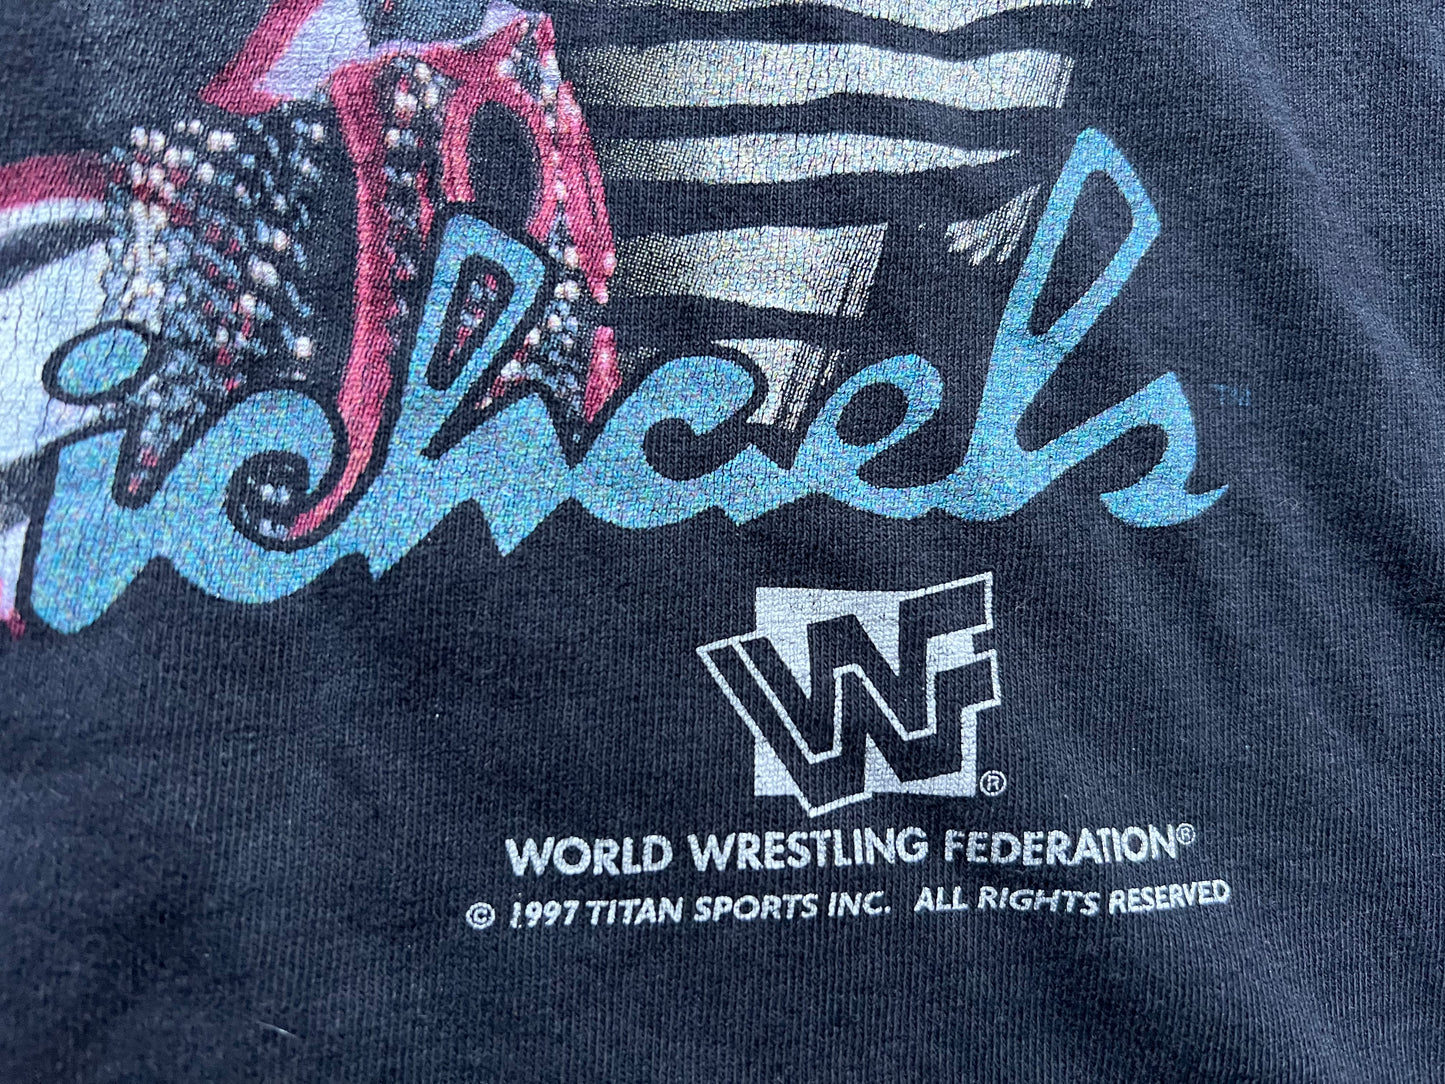 1997 WWF “The Heartbreak Kid” Shawn Michaels shirt